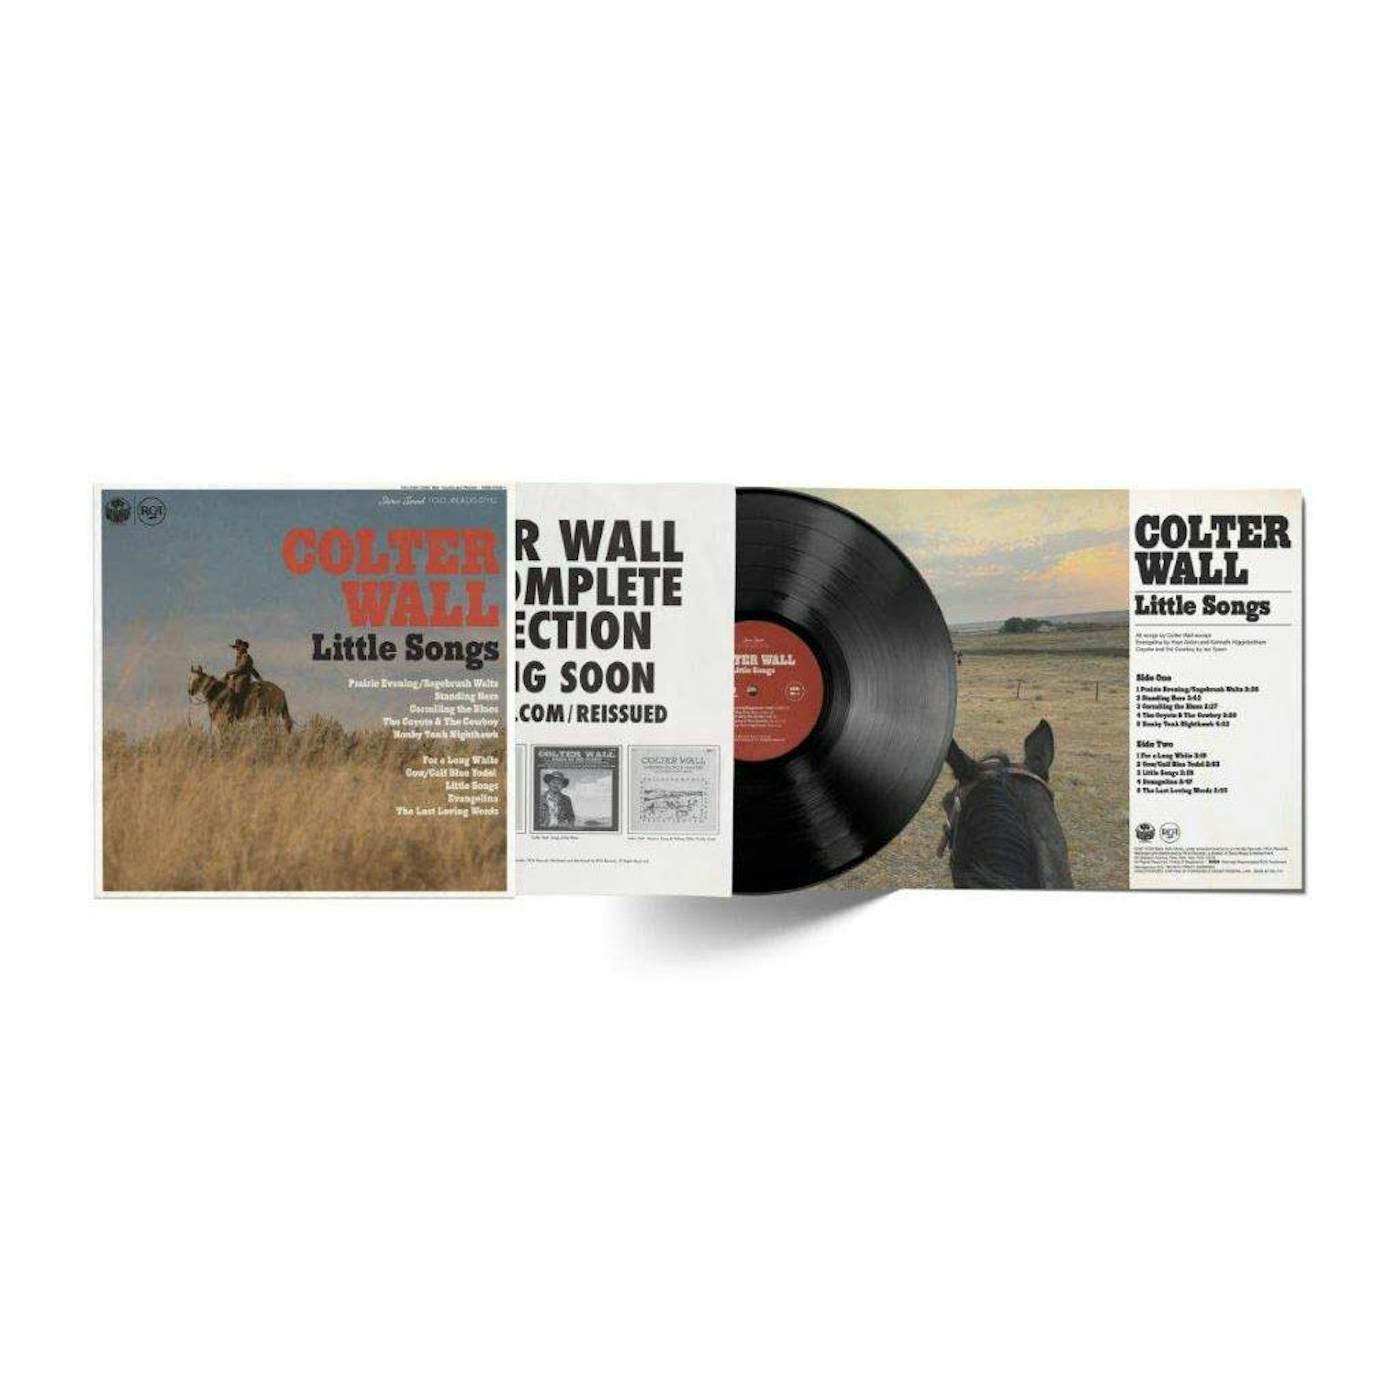 tapperhed Børnecenter evne Colter Wall Little Songs Vinyl Record